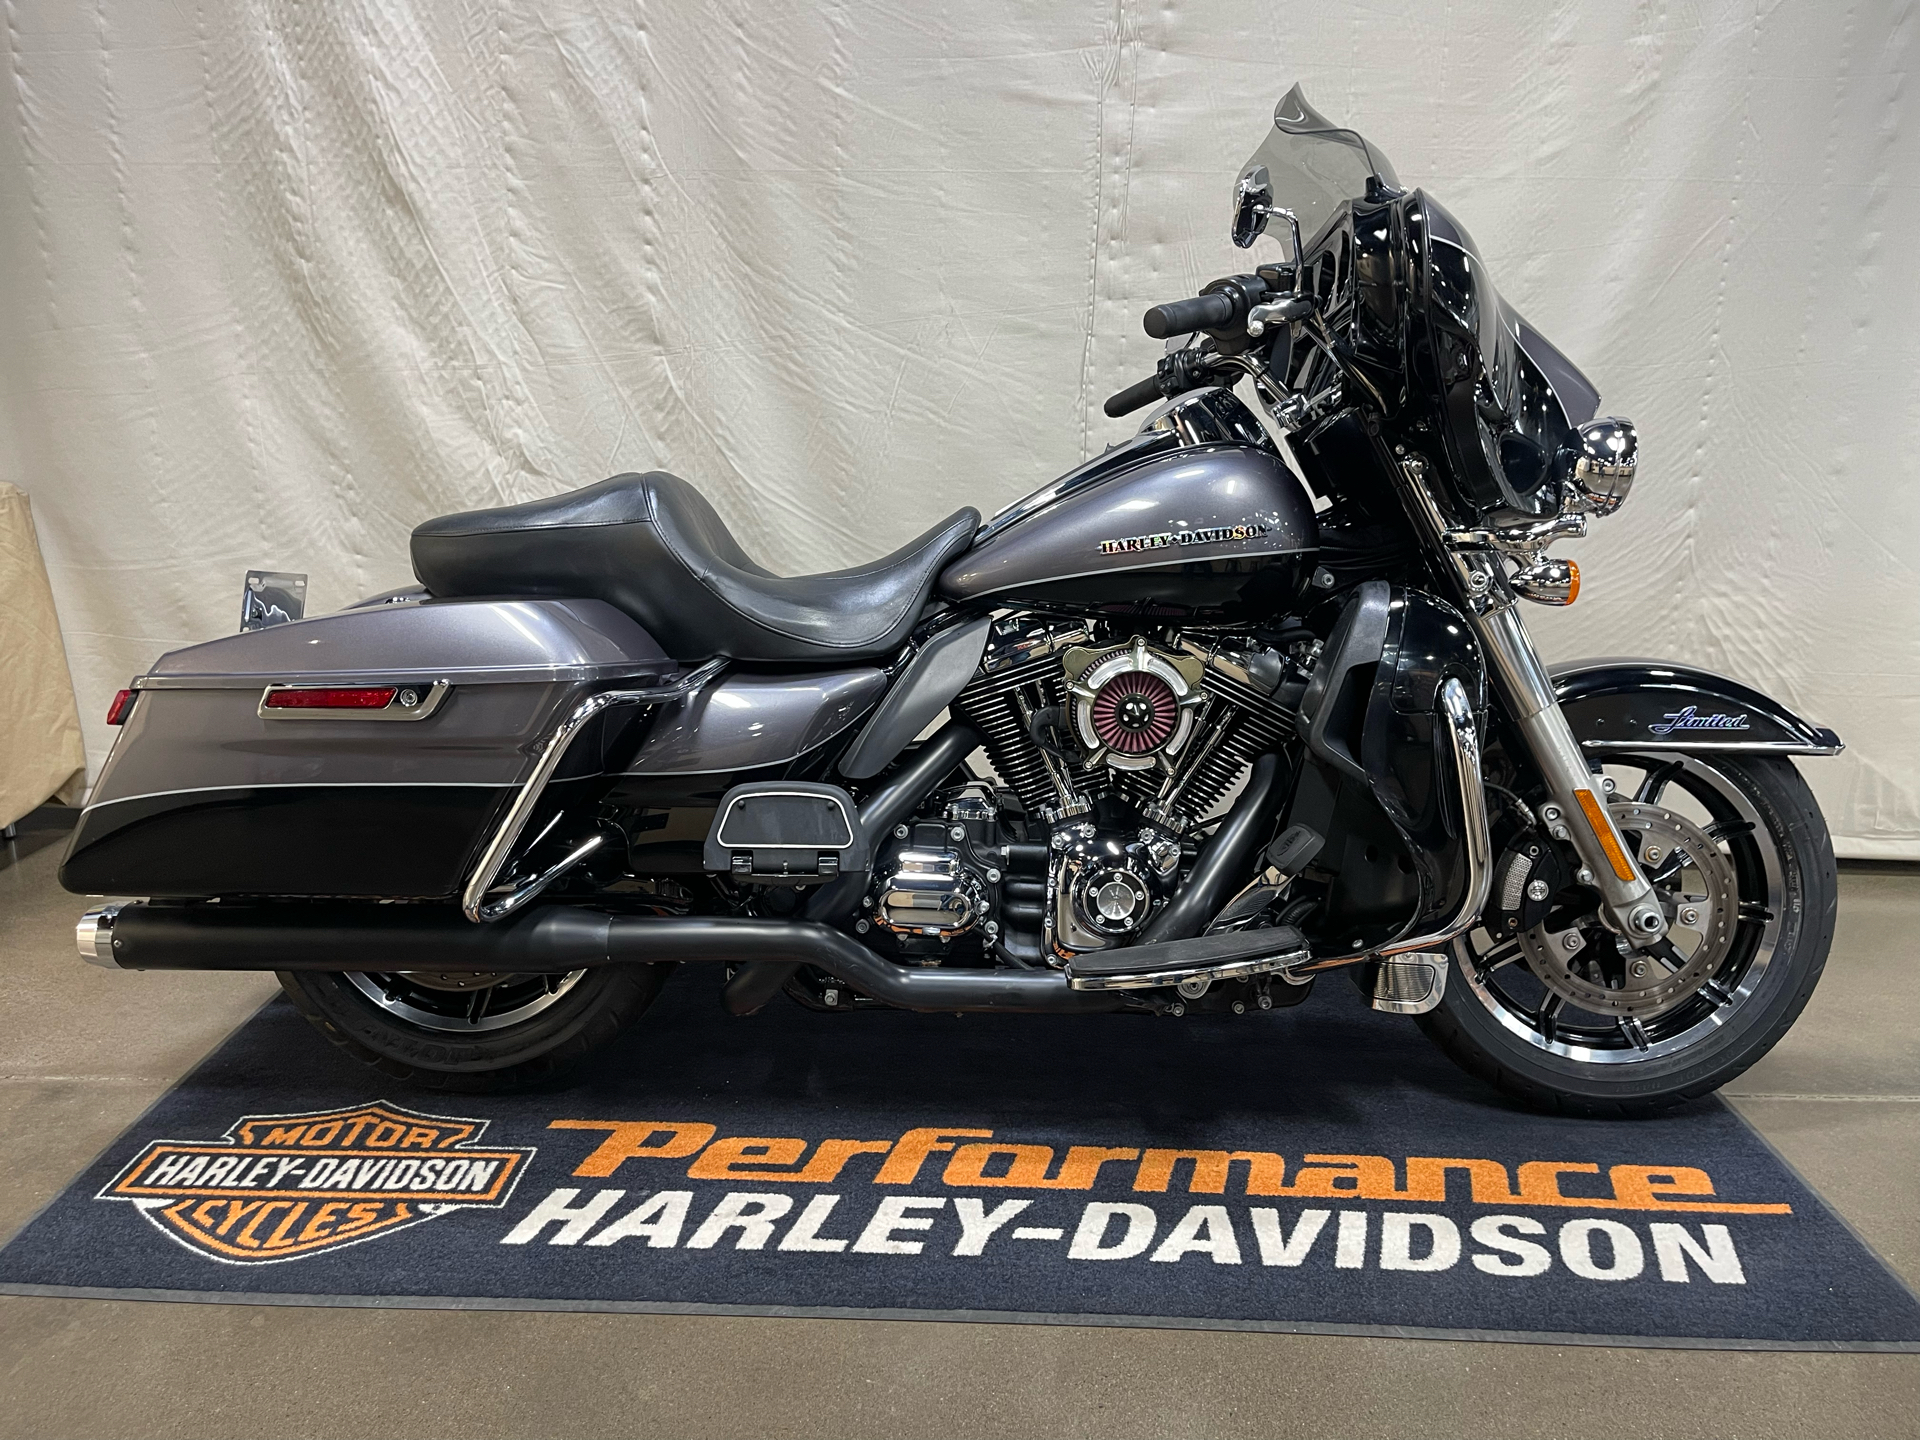 2014 Harley-Davidson Ultra Limited in Syracuse, New York - Photo 1